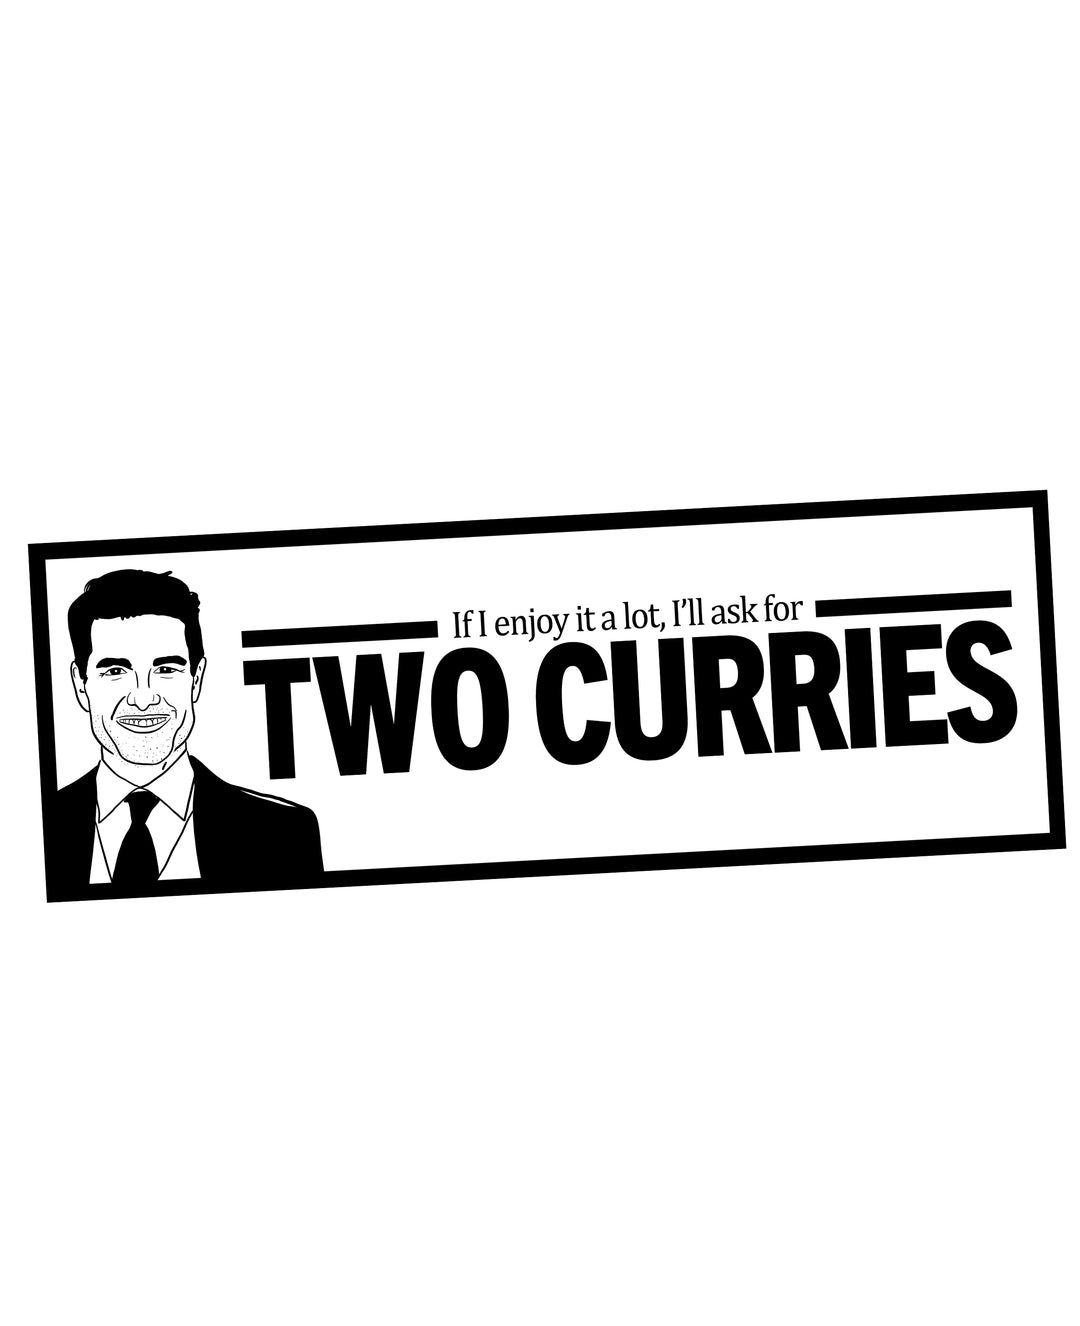 Tom Cruise Curry Masochism inspired sticker